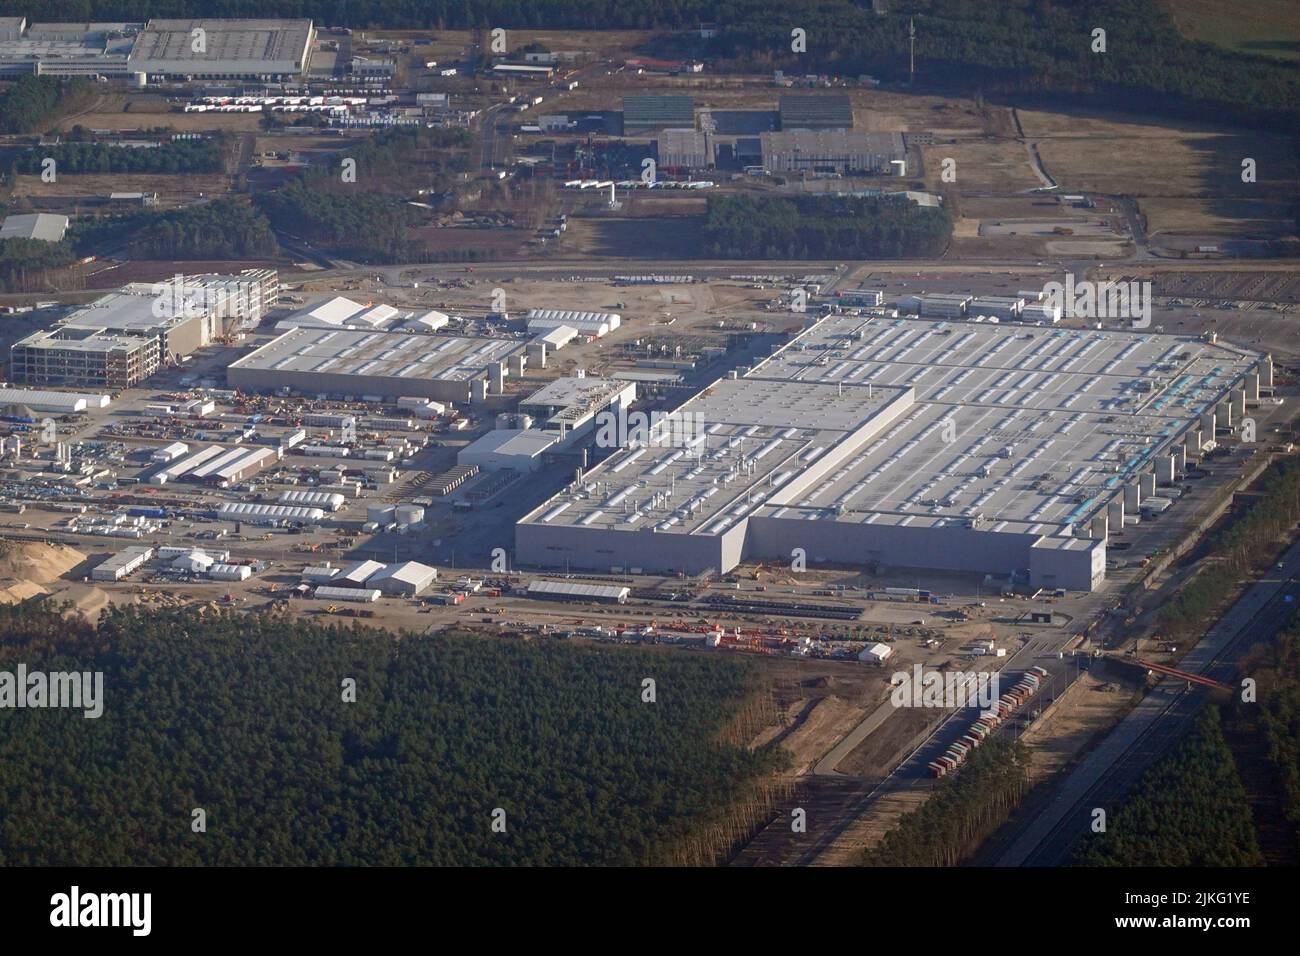 27.03.2022, Germany, Brandenburg, Gruenheide - Aerial view of the Tesla Gigafactory Berlin-Brandenburg. 00S220327D239CAROEX.JPG [MODEL RELEASE: NO, PR Stock Photo